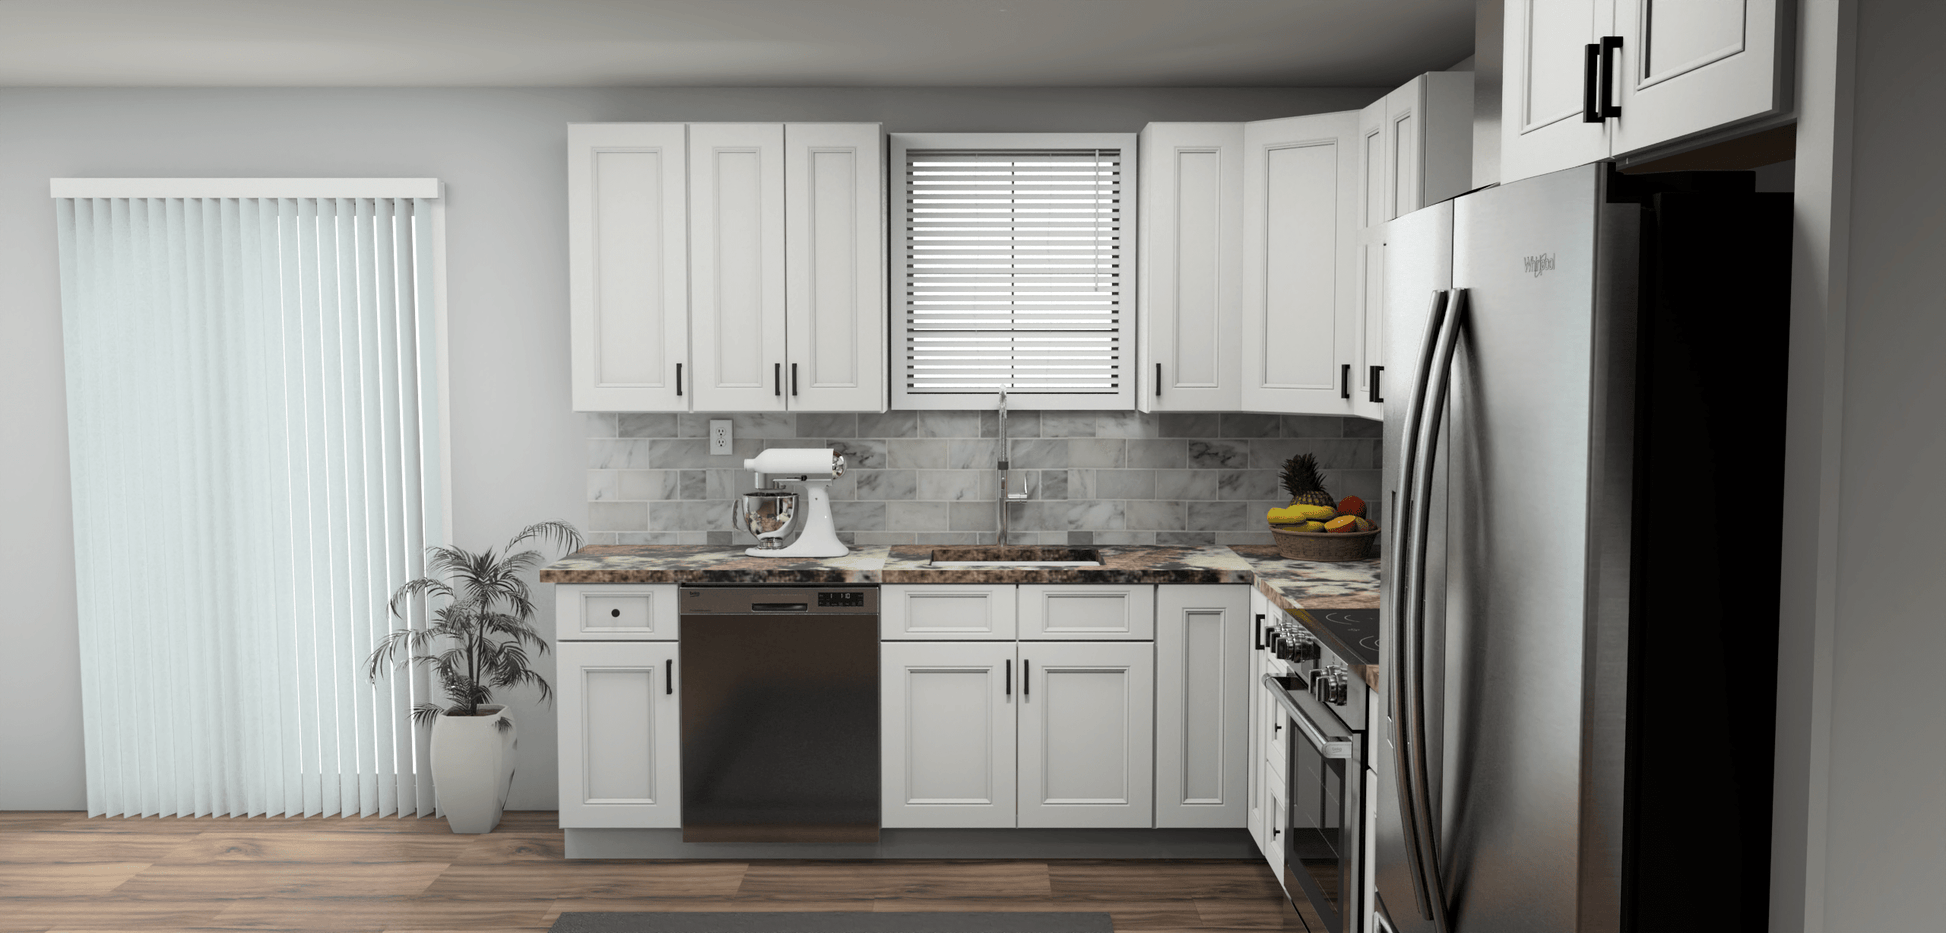 Fabuwood Allure Nexus Frost 9 x 13 L Shaped Kitchen Side Layout Photo